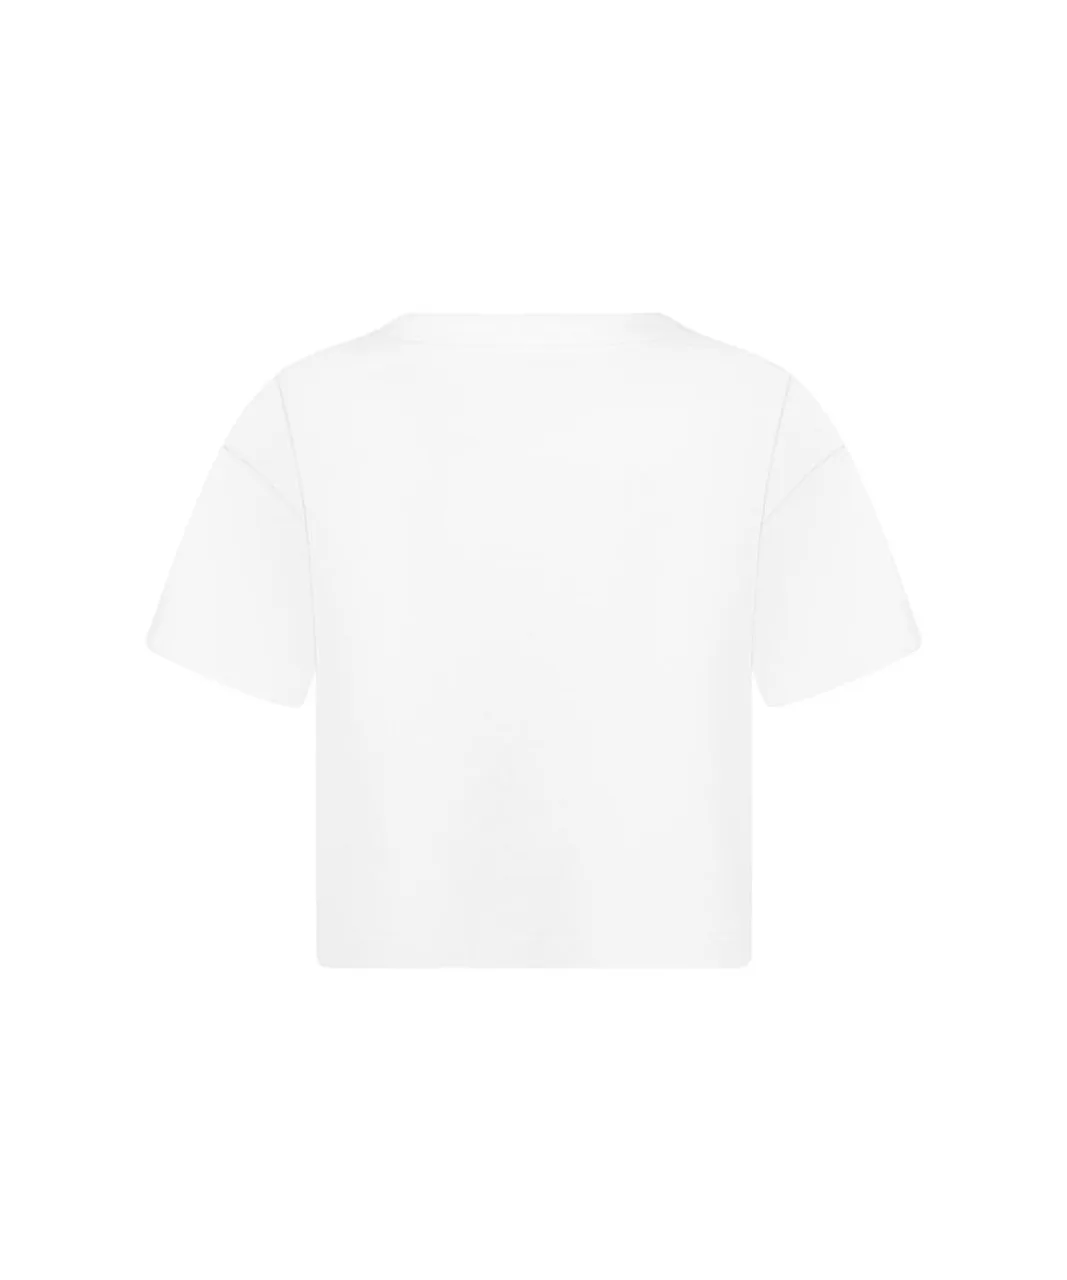 Levi's Kids Wear Girls Batwing Logo Cropped T-Shirt - White